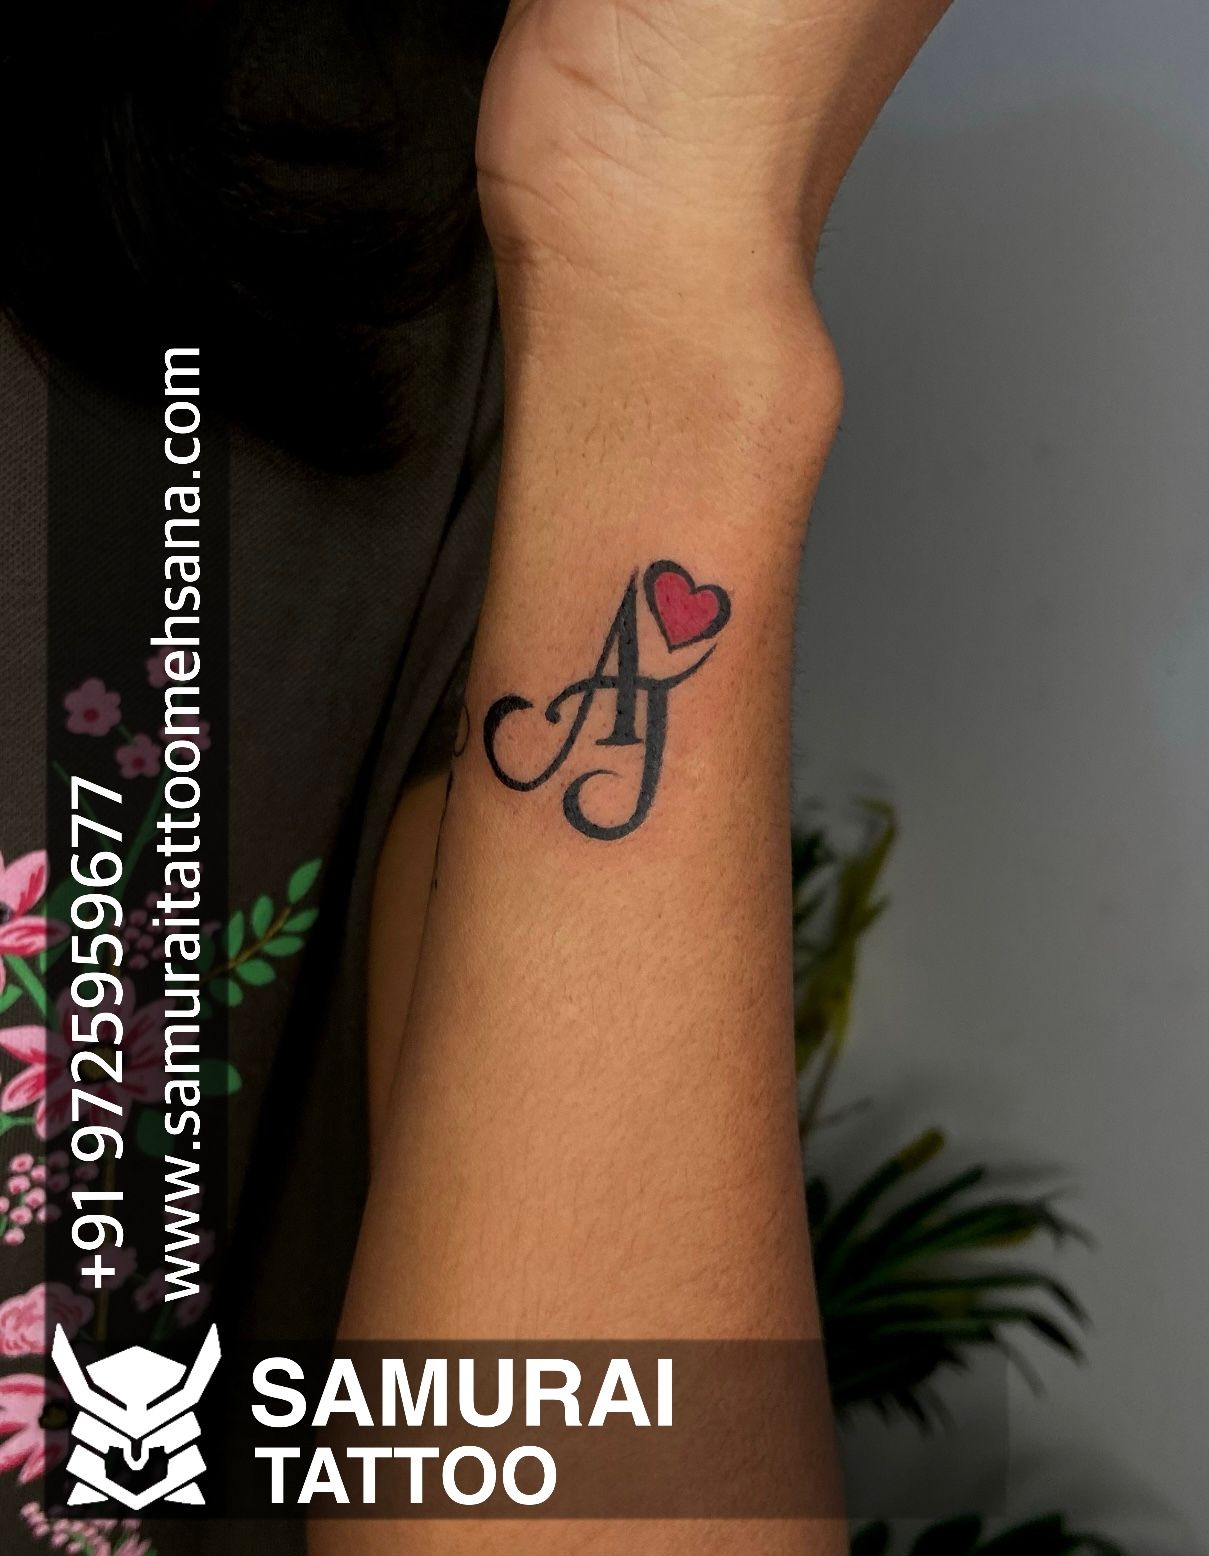 AP Letter Tattoo Done By ajtattoopune  AJ Tattoo Studio  Facebook